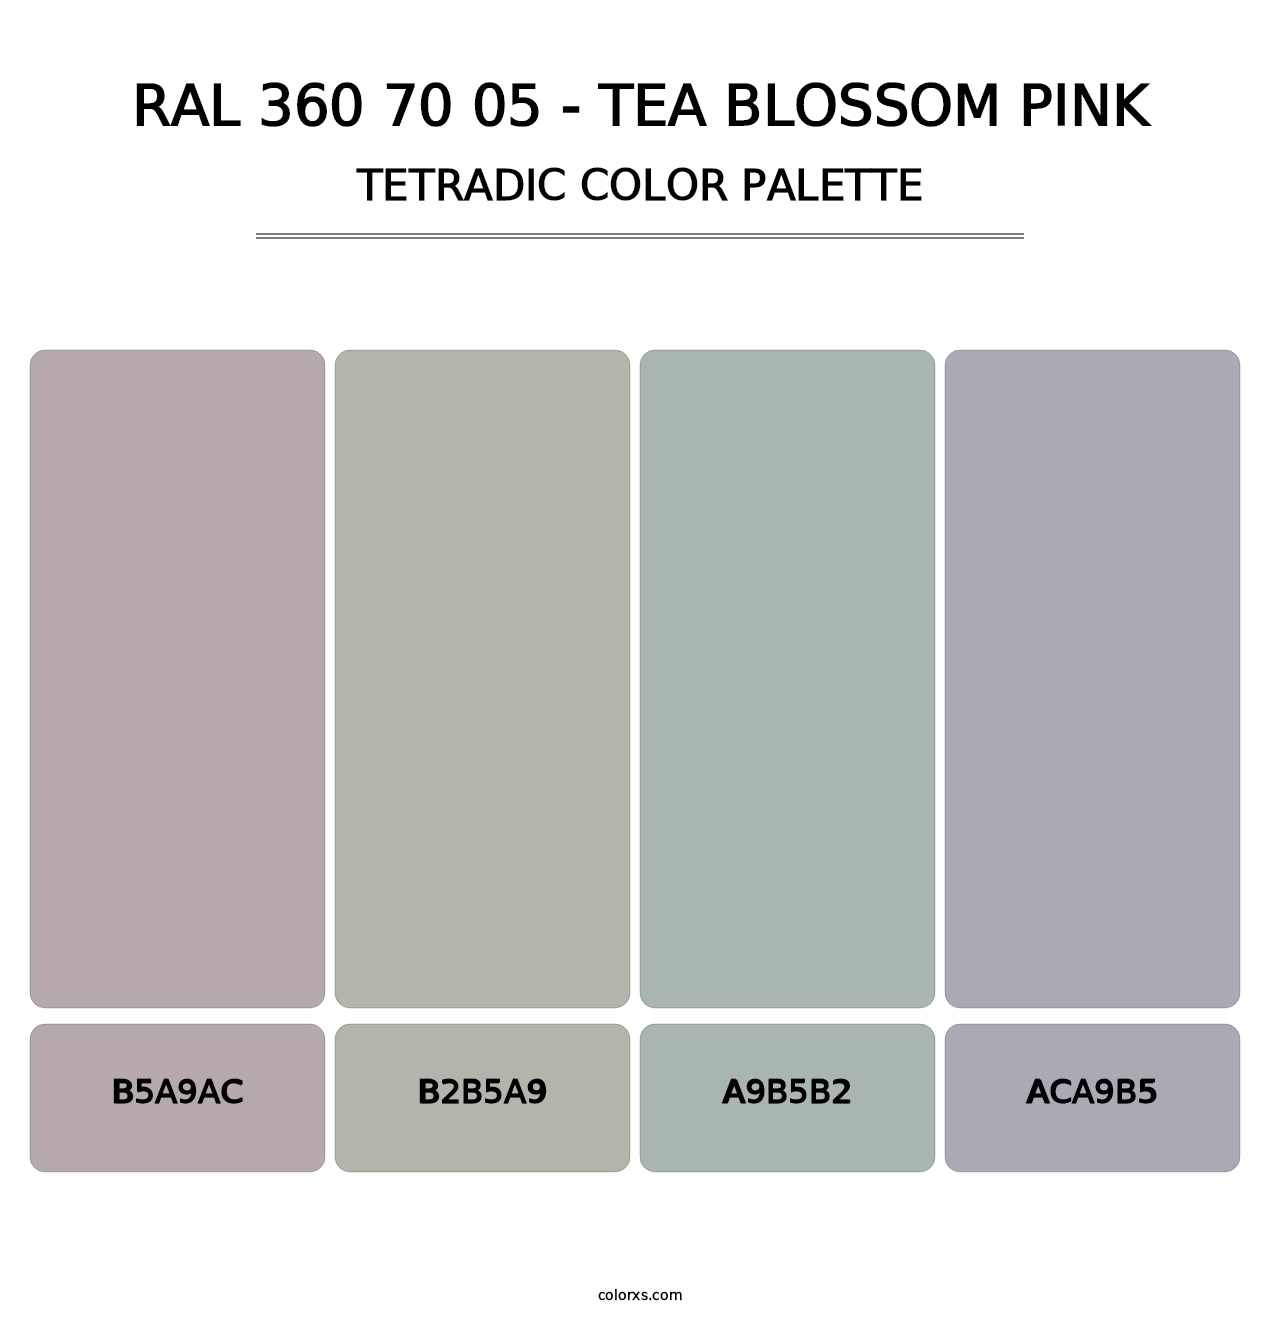 RAL 360 70 05 - Tea Blossom Pink - Tetradic Color Palette